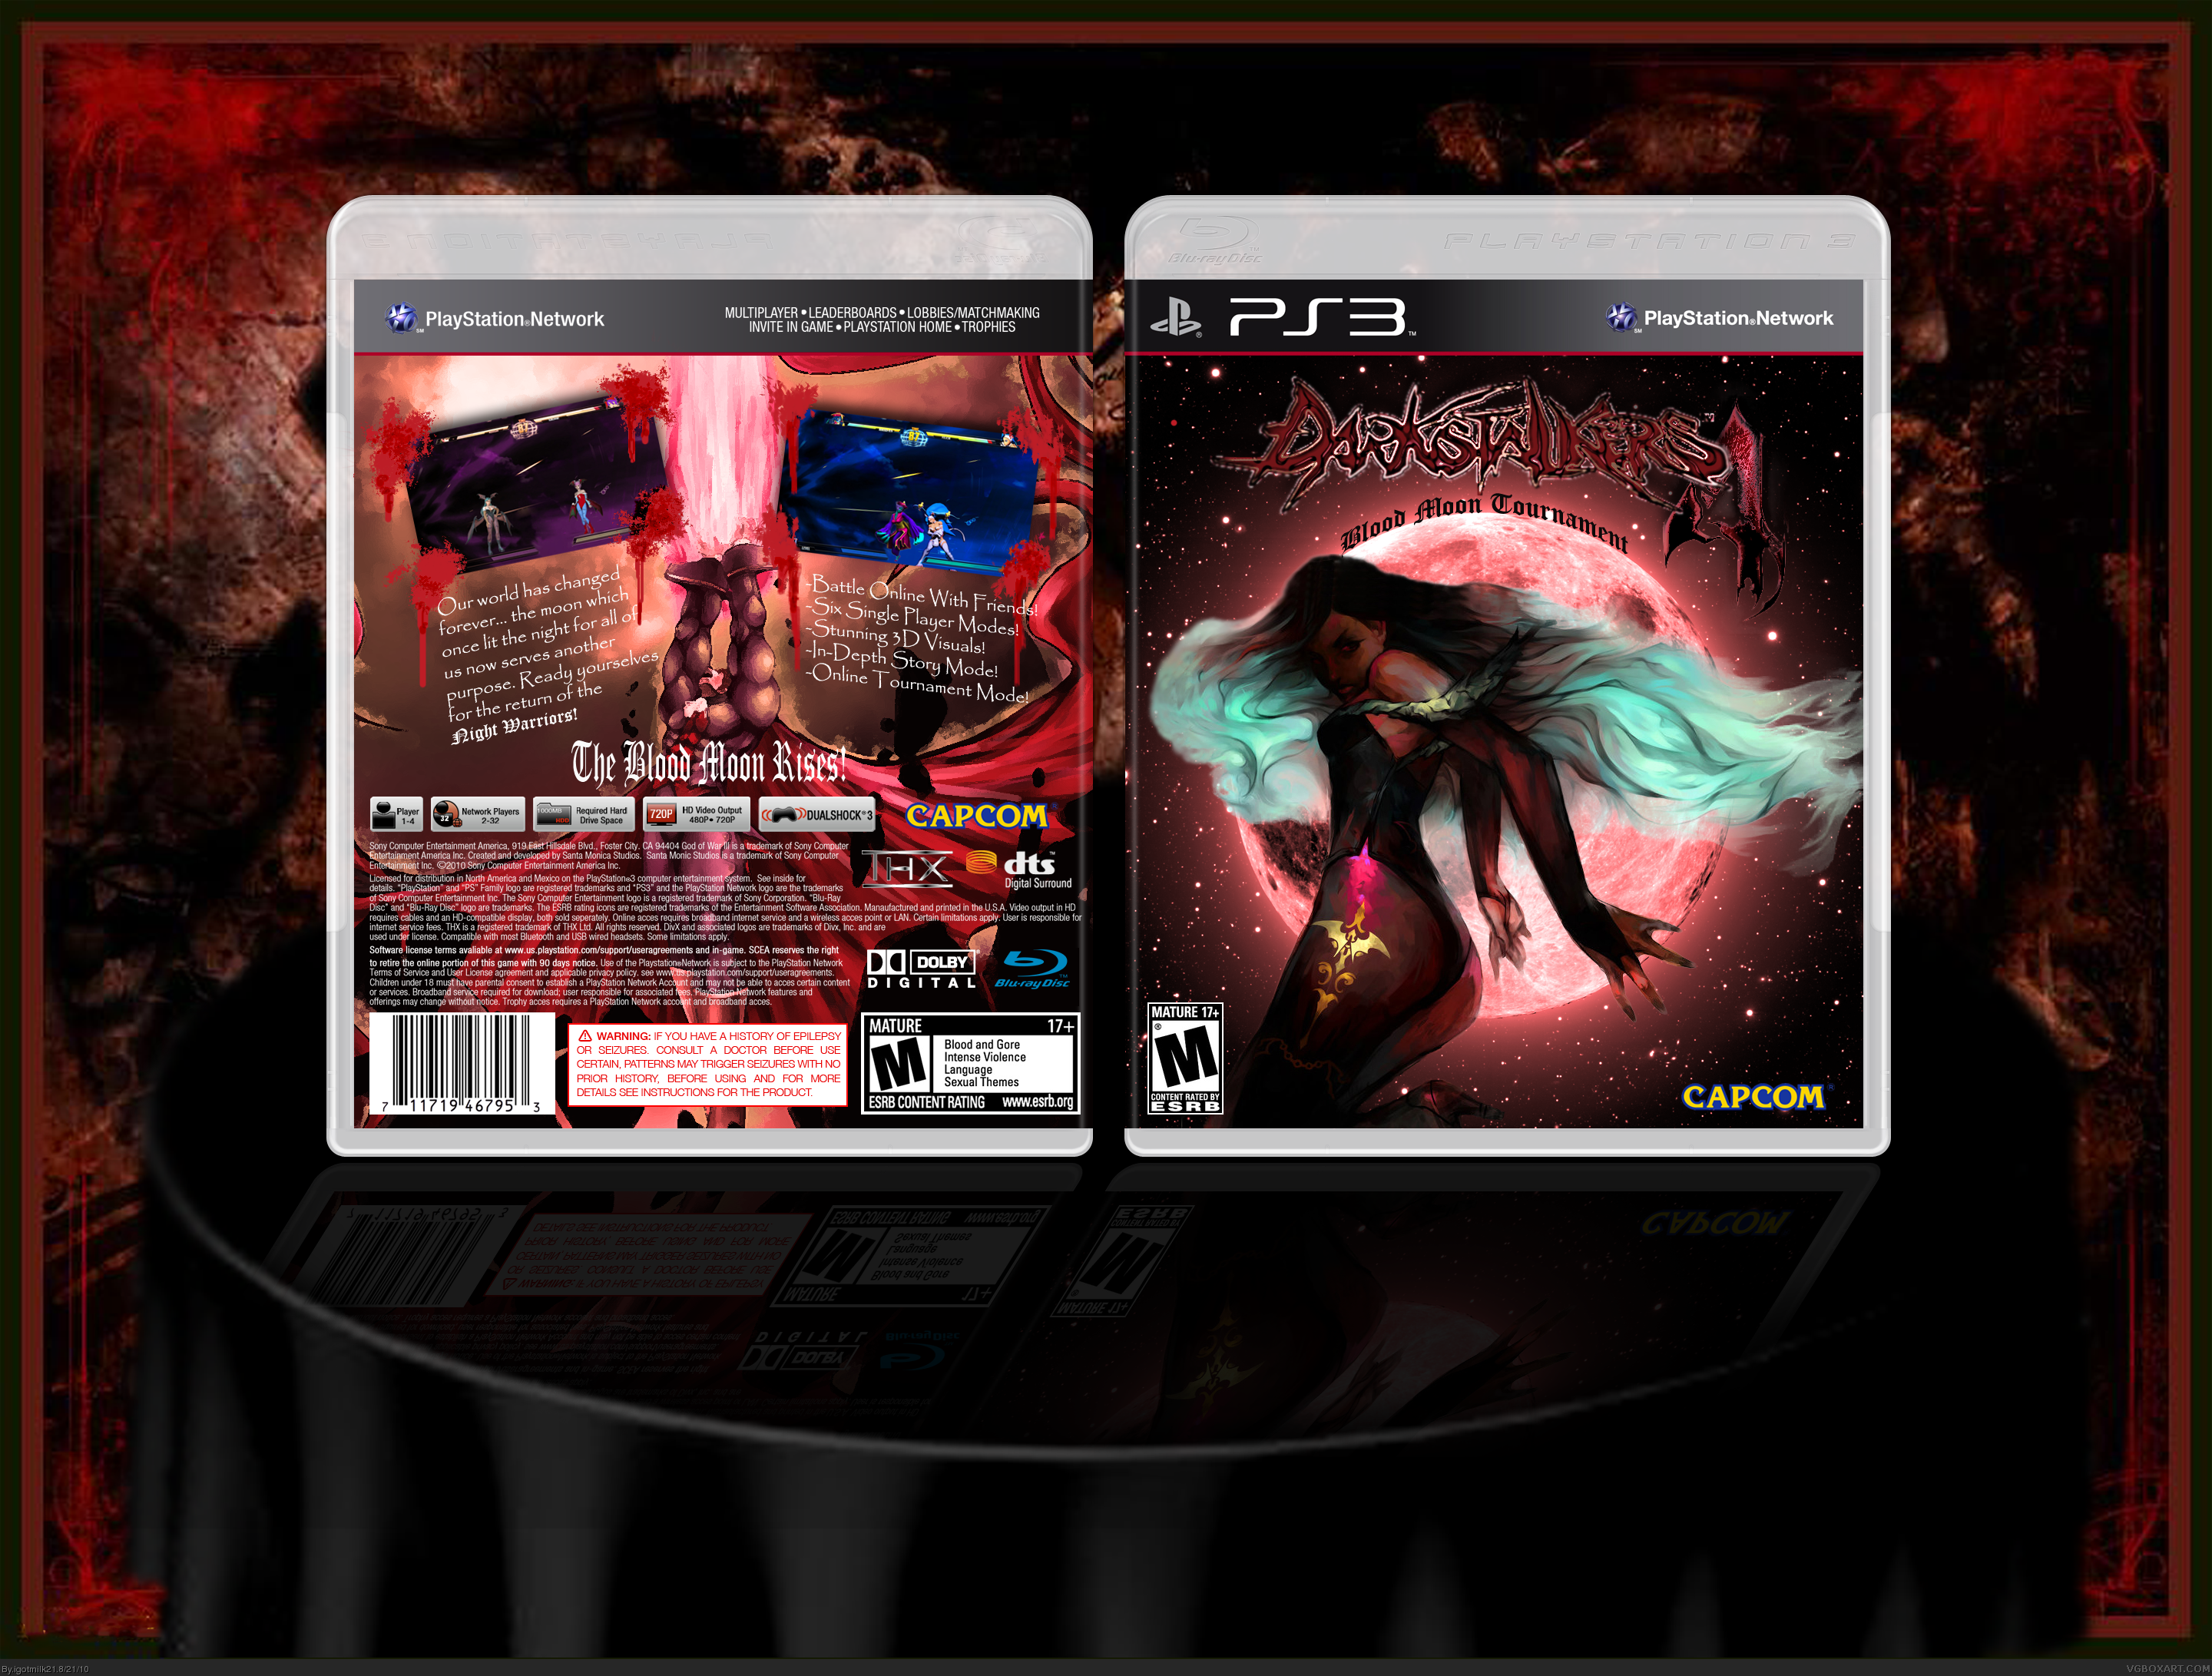 Darkstalkers 4: Blood Moon Tournament box cover